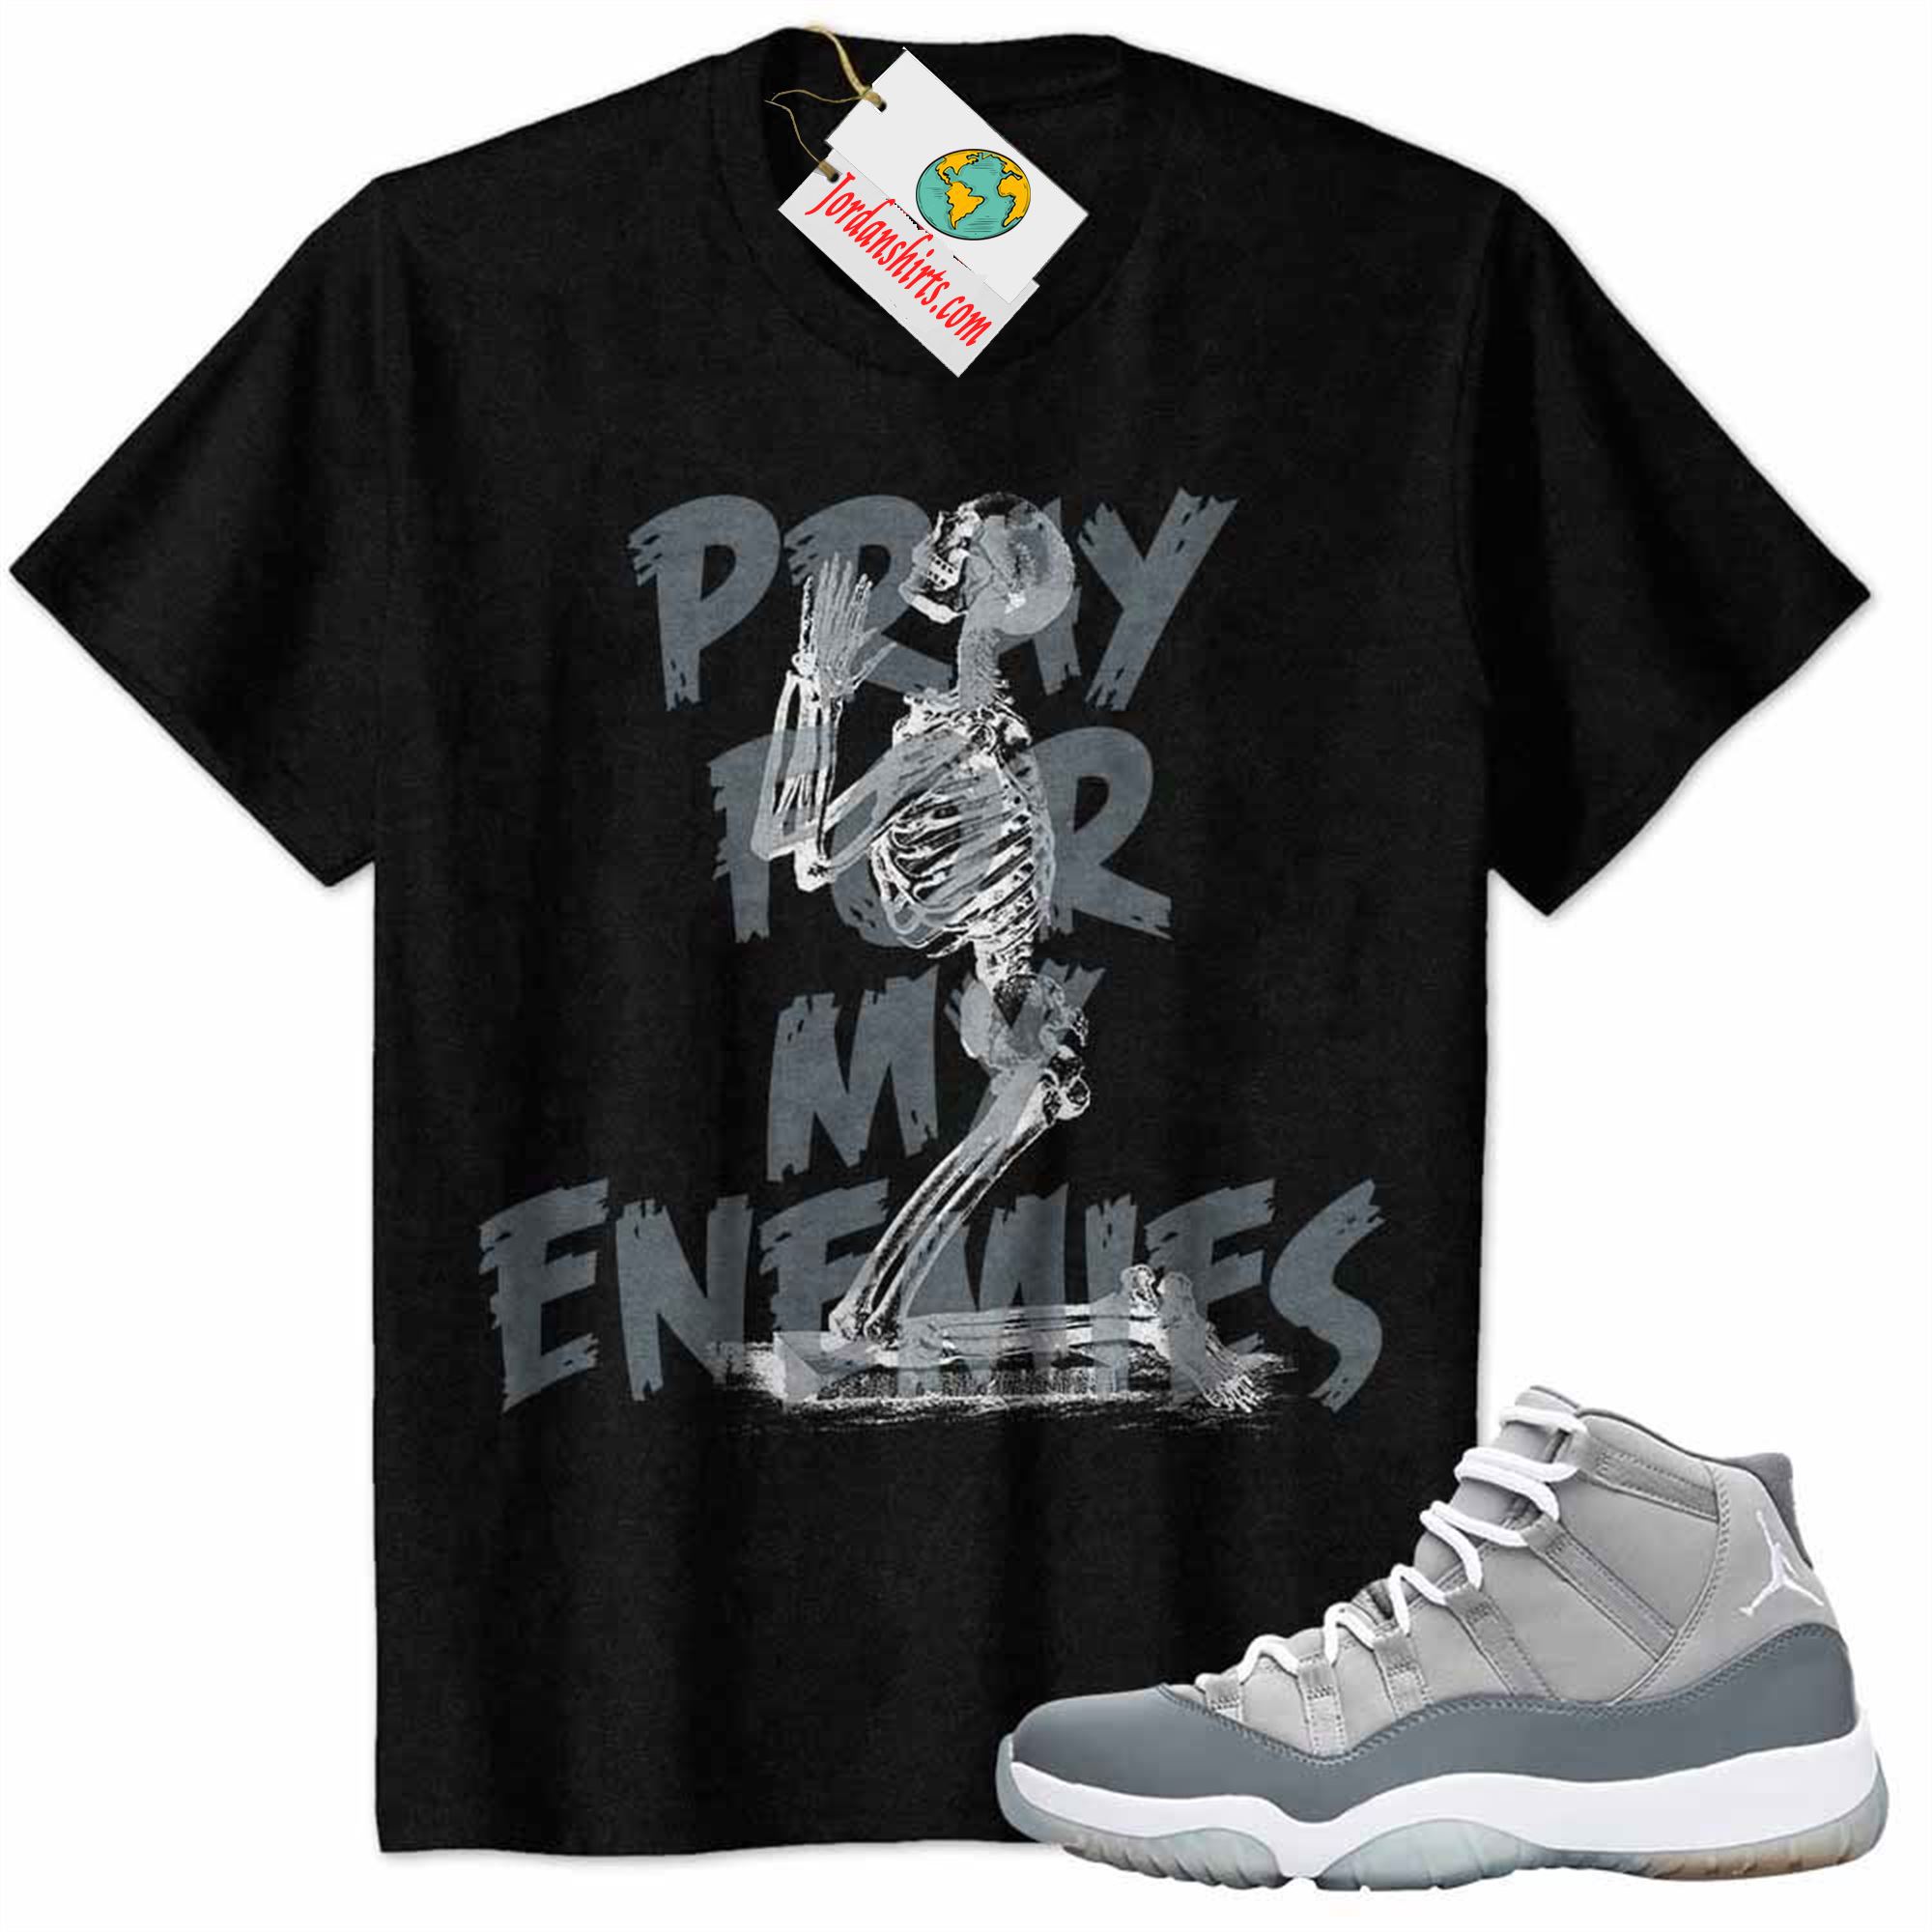 Jordan 11 Shirt, Pray For My Enemies Black Air Jordan 11 Cool Grey 11s Full Size Up To 5xl